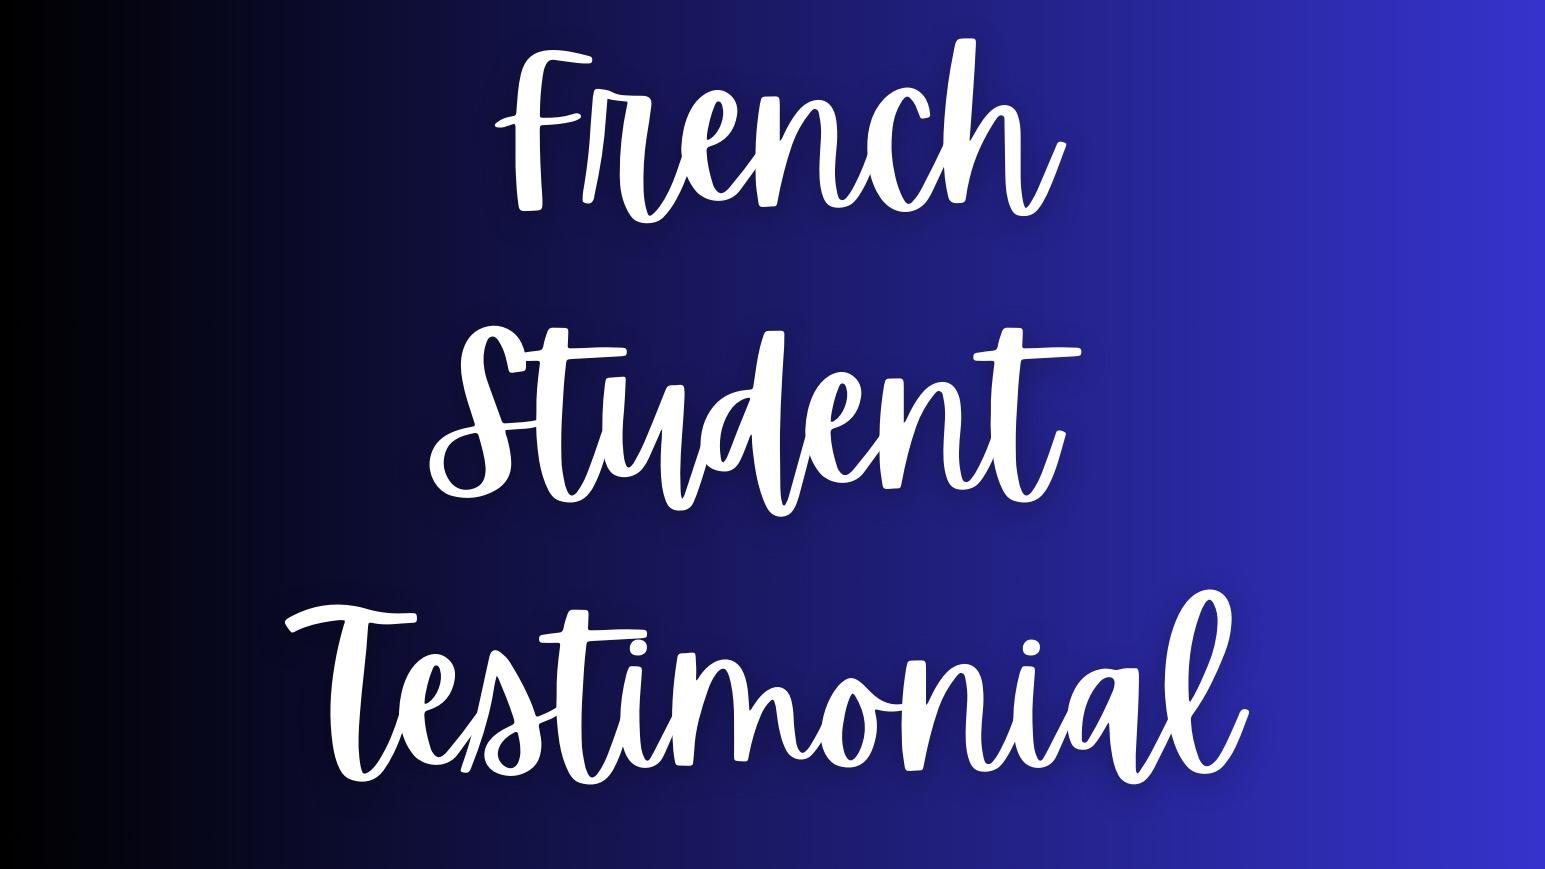 French Student Testimonial